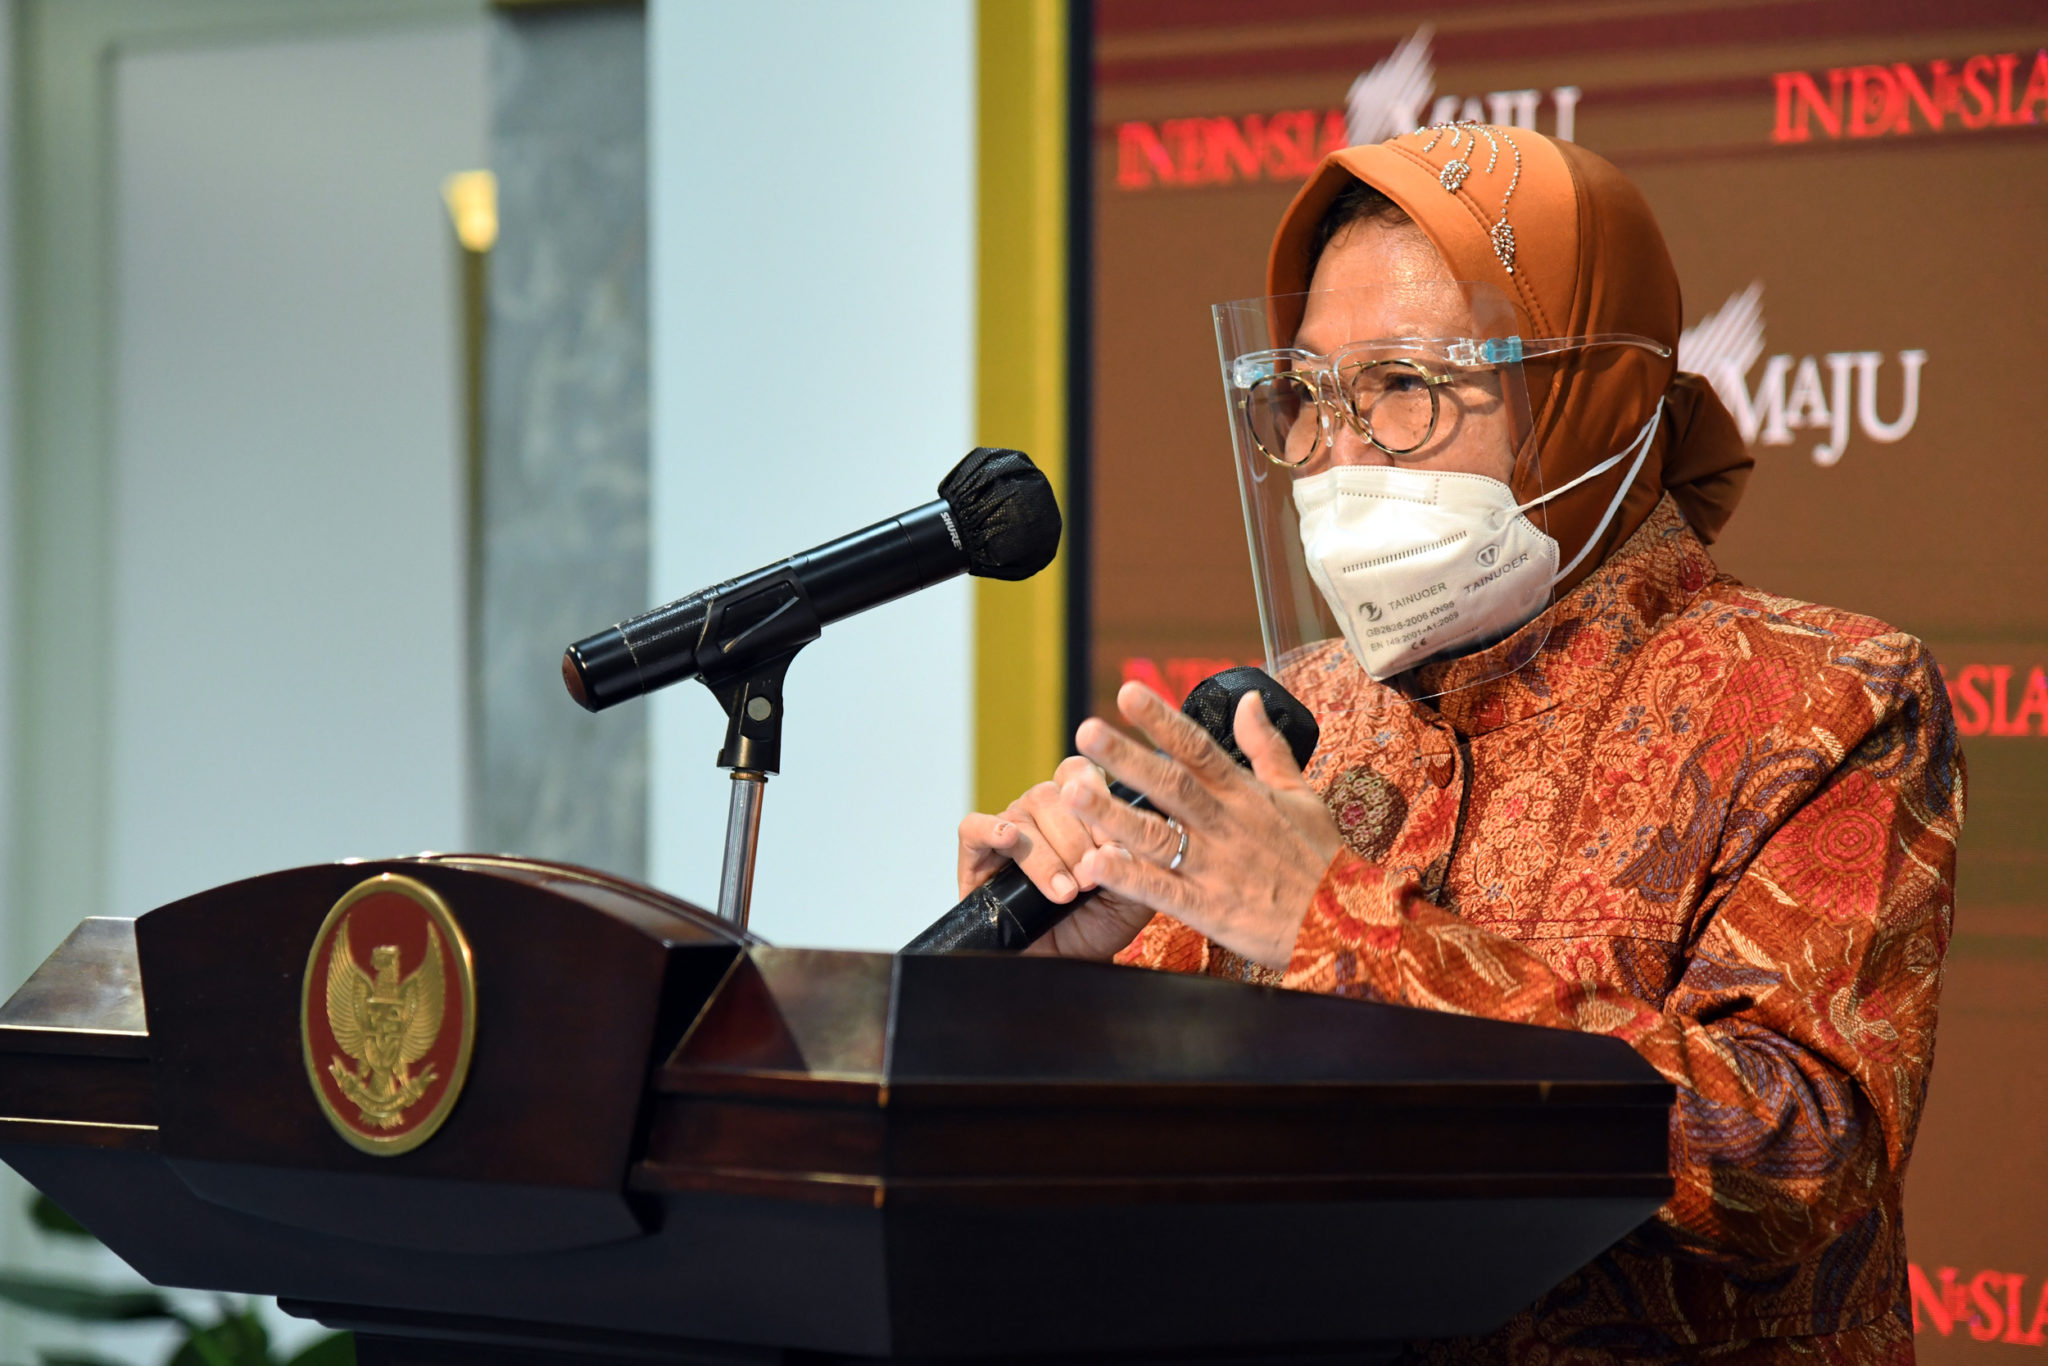 Menteri Risma Ribut dengan Aktivis di Lombok Timur